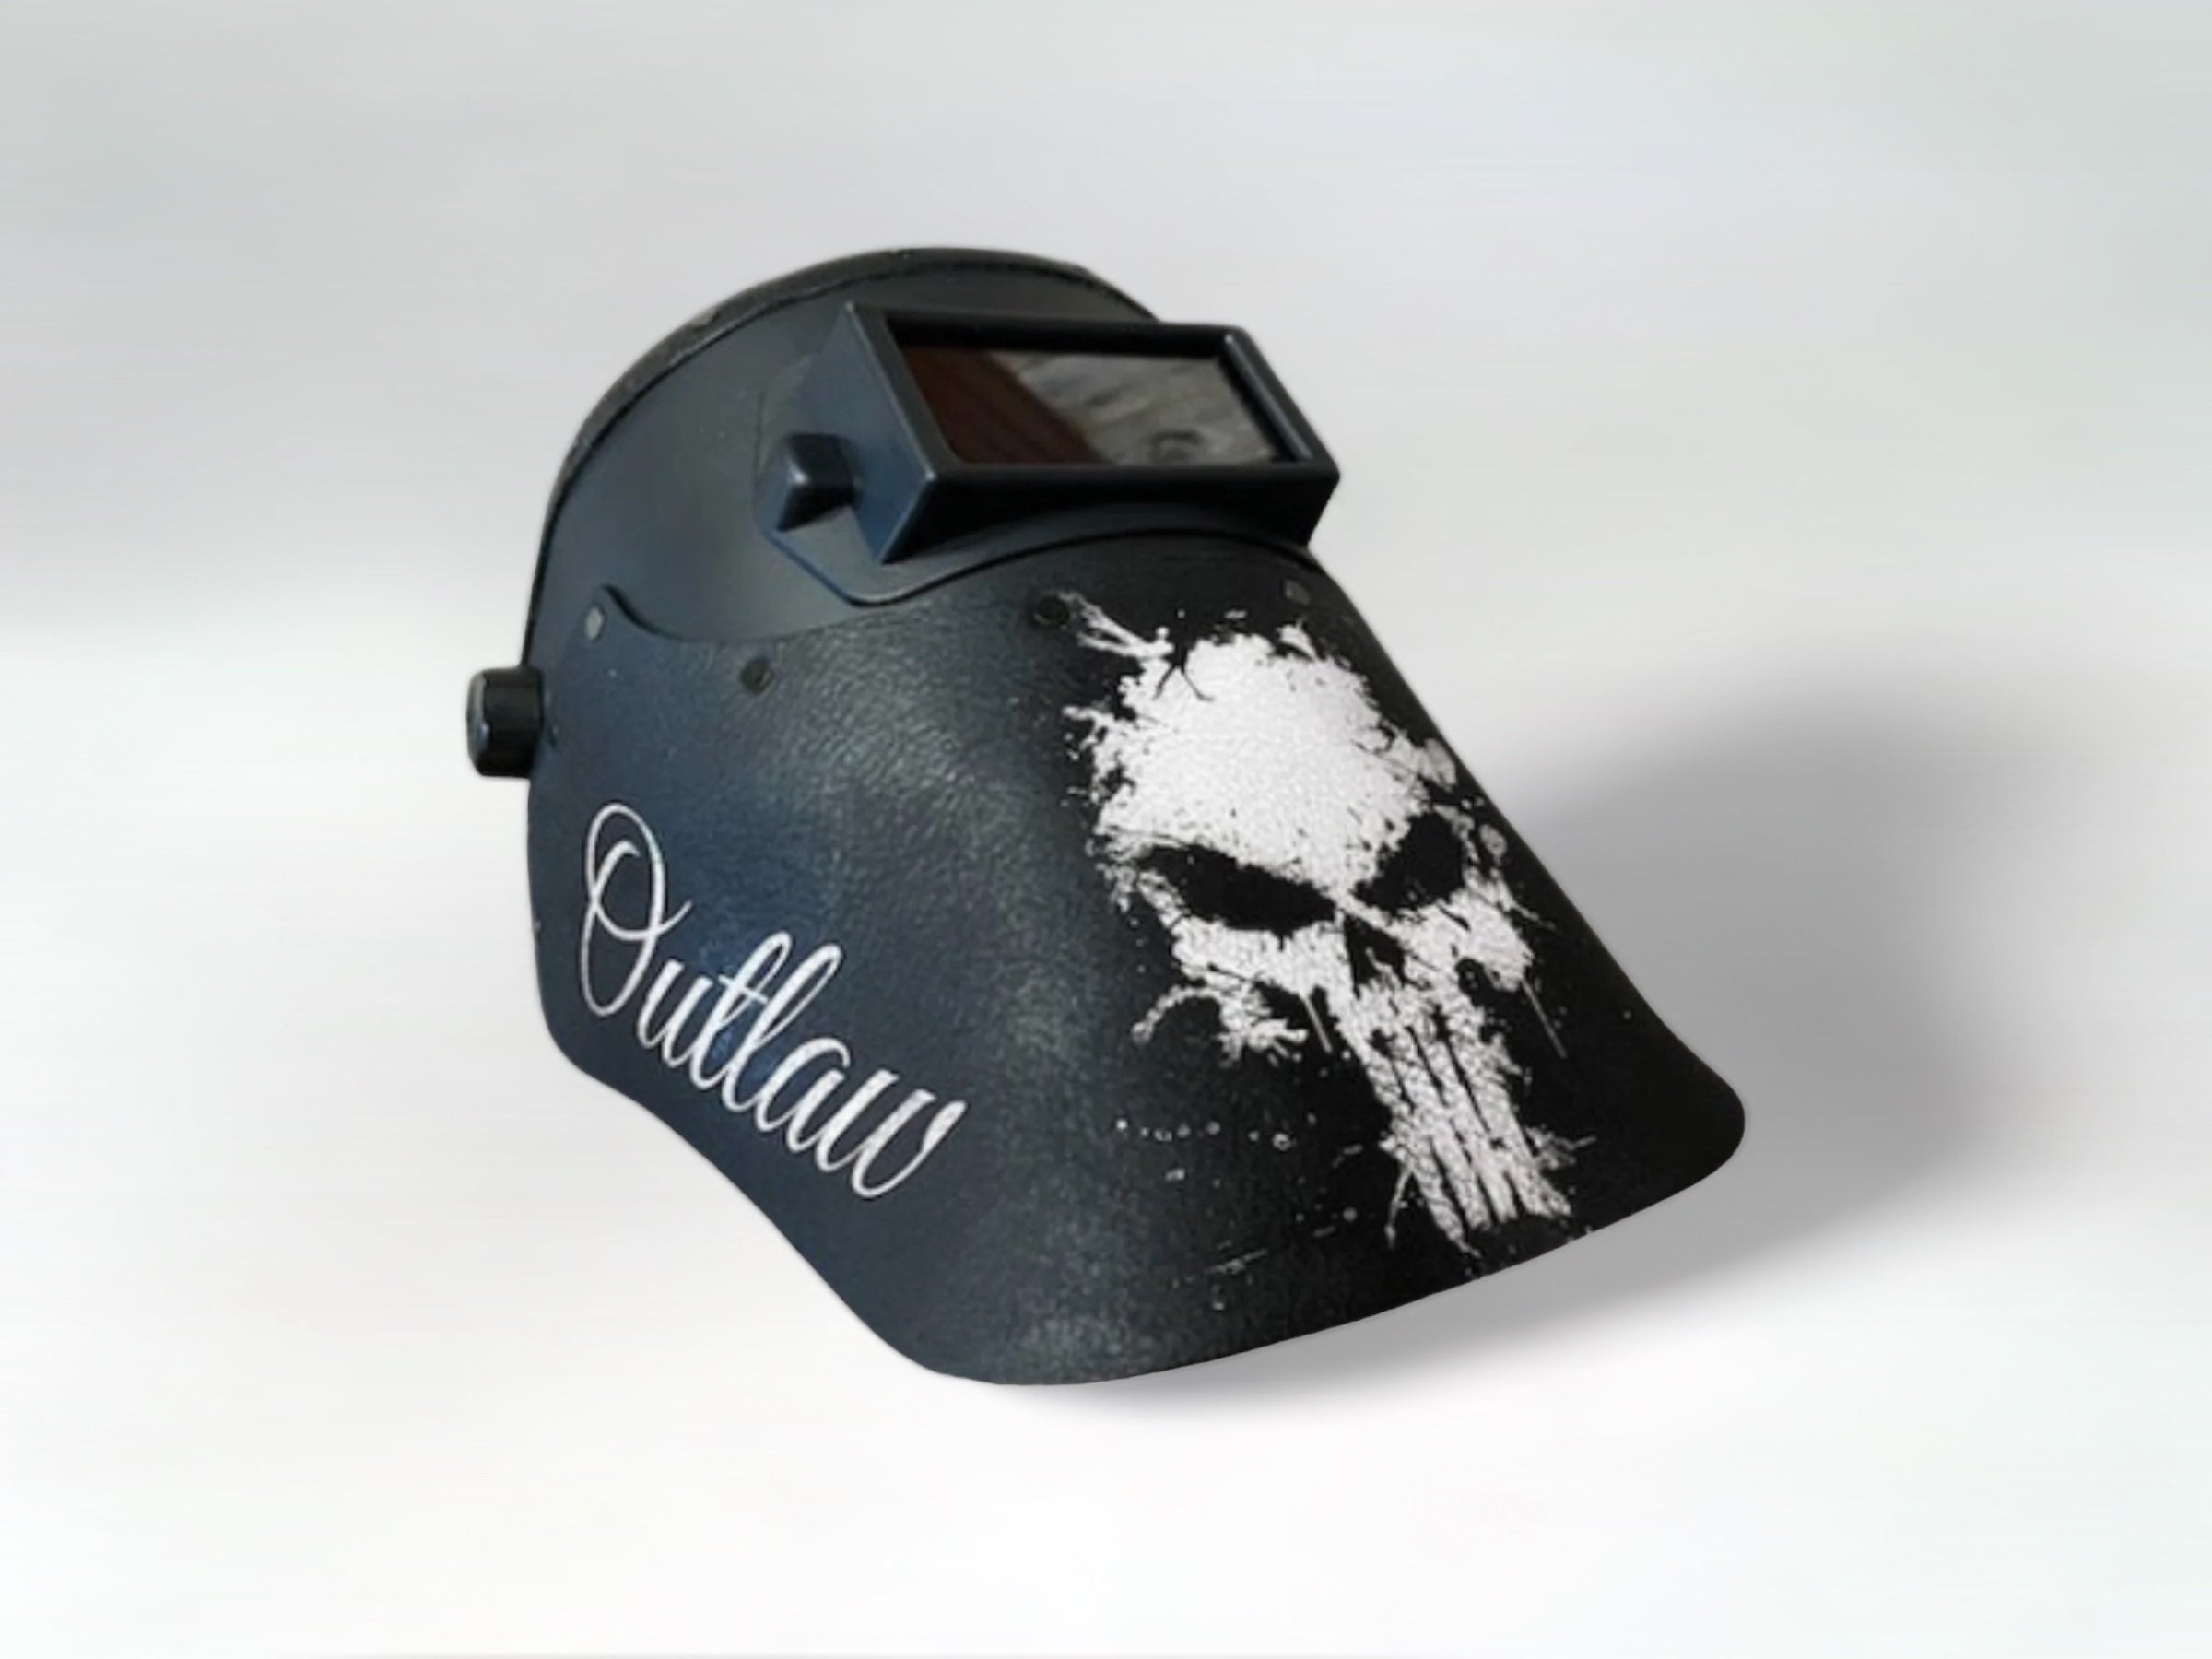 Outlaw Leather - Welding Hood - $$$$ Maker